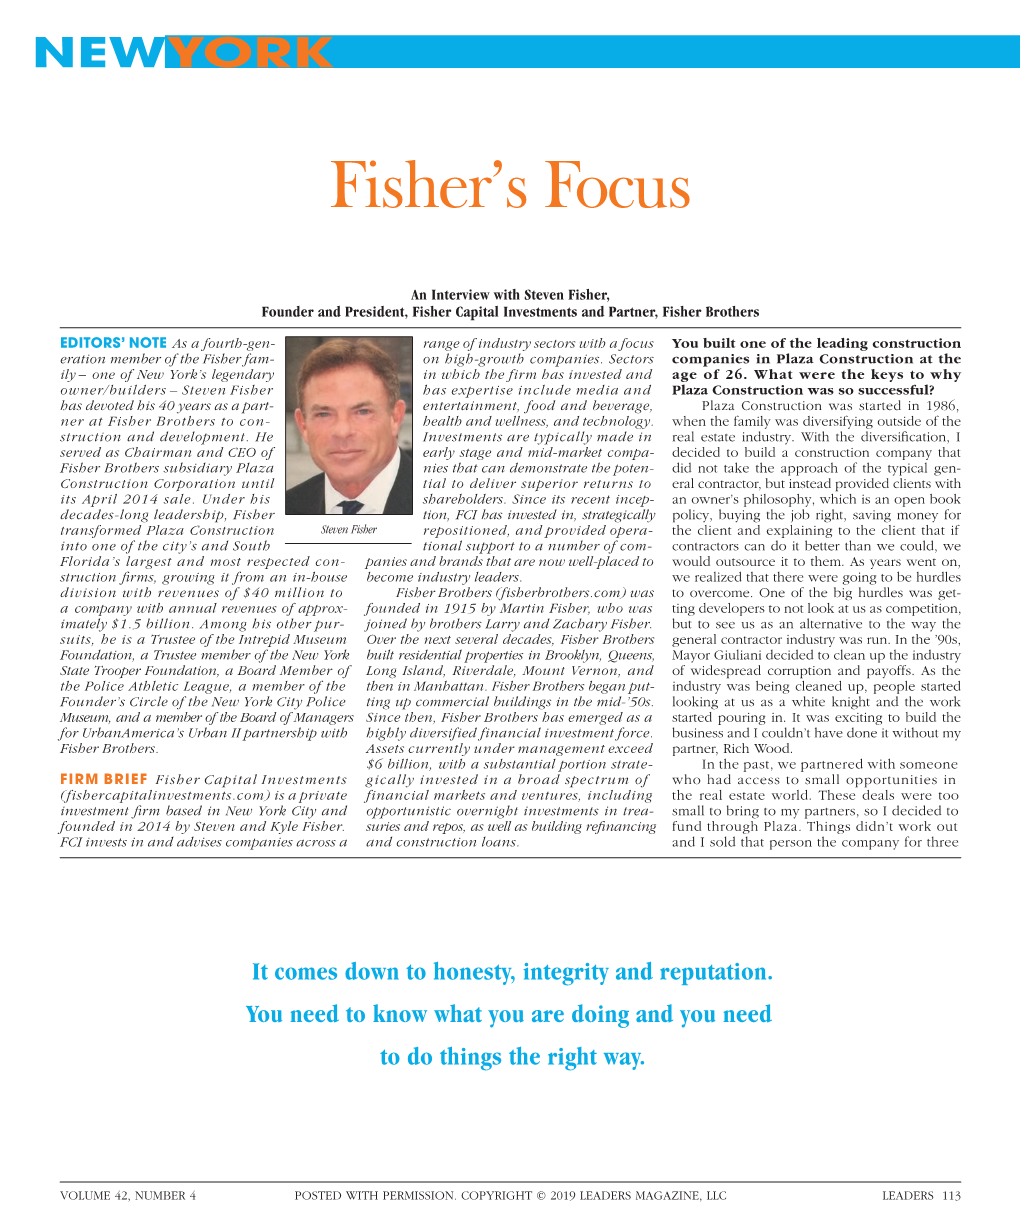 Fisher's Focus